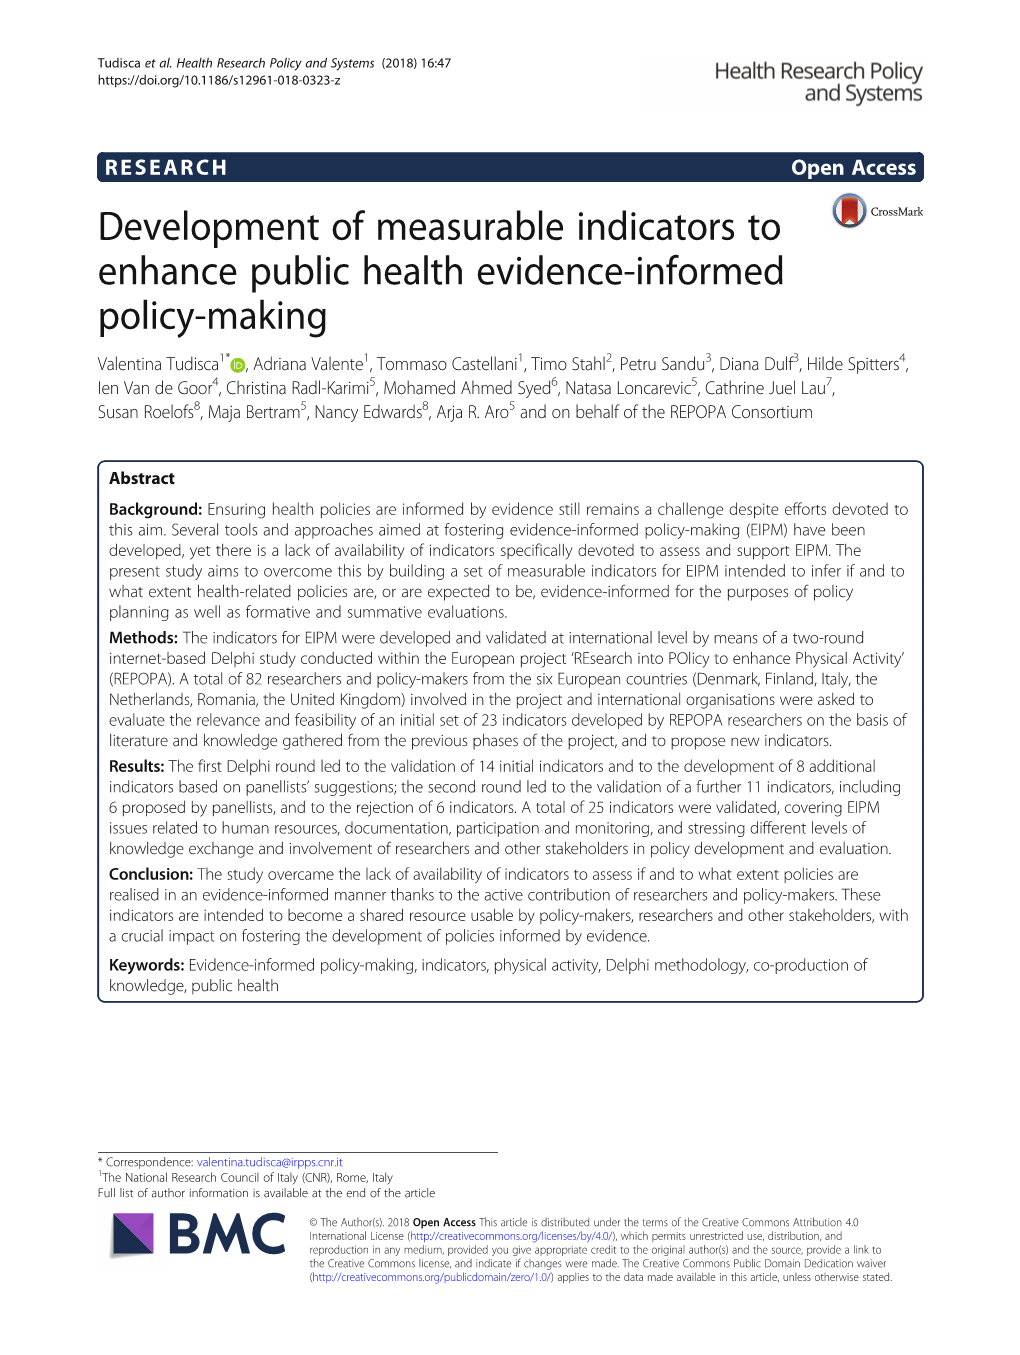 Development of Measurable Indicators to Enhance Public Health